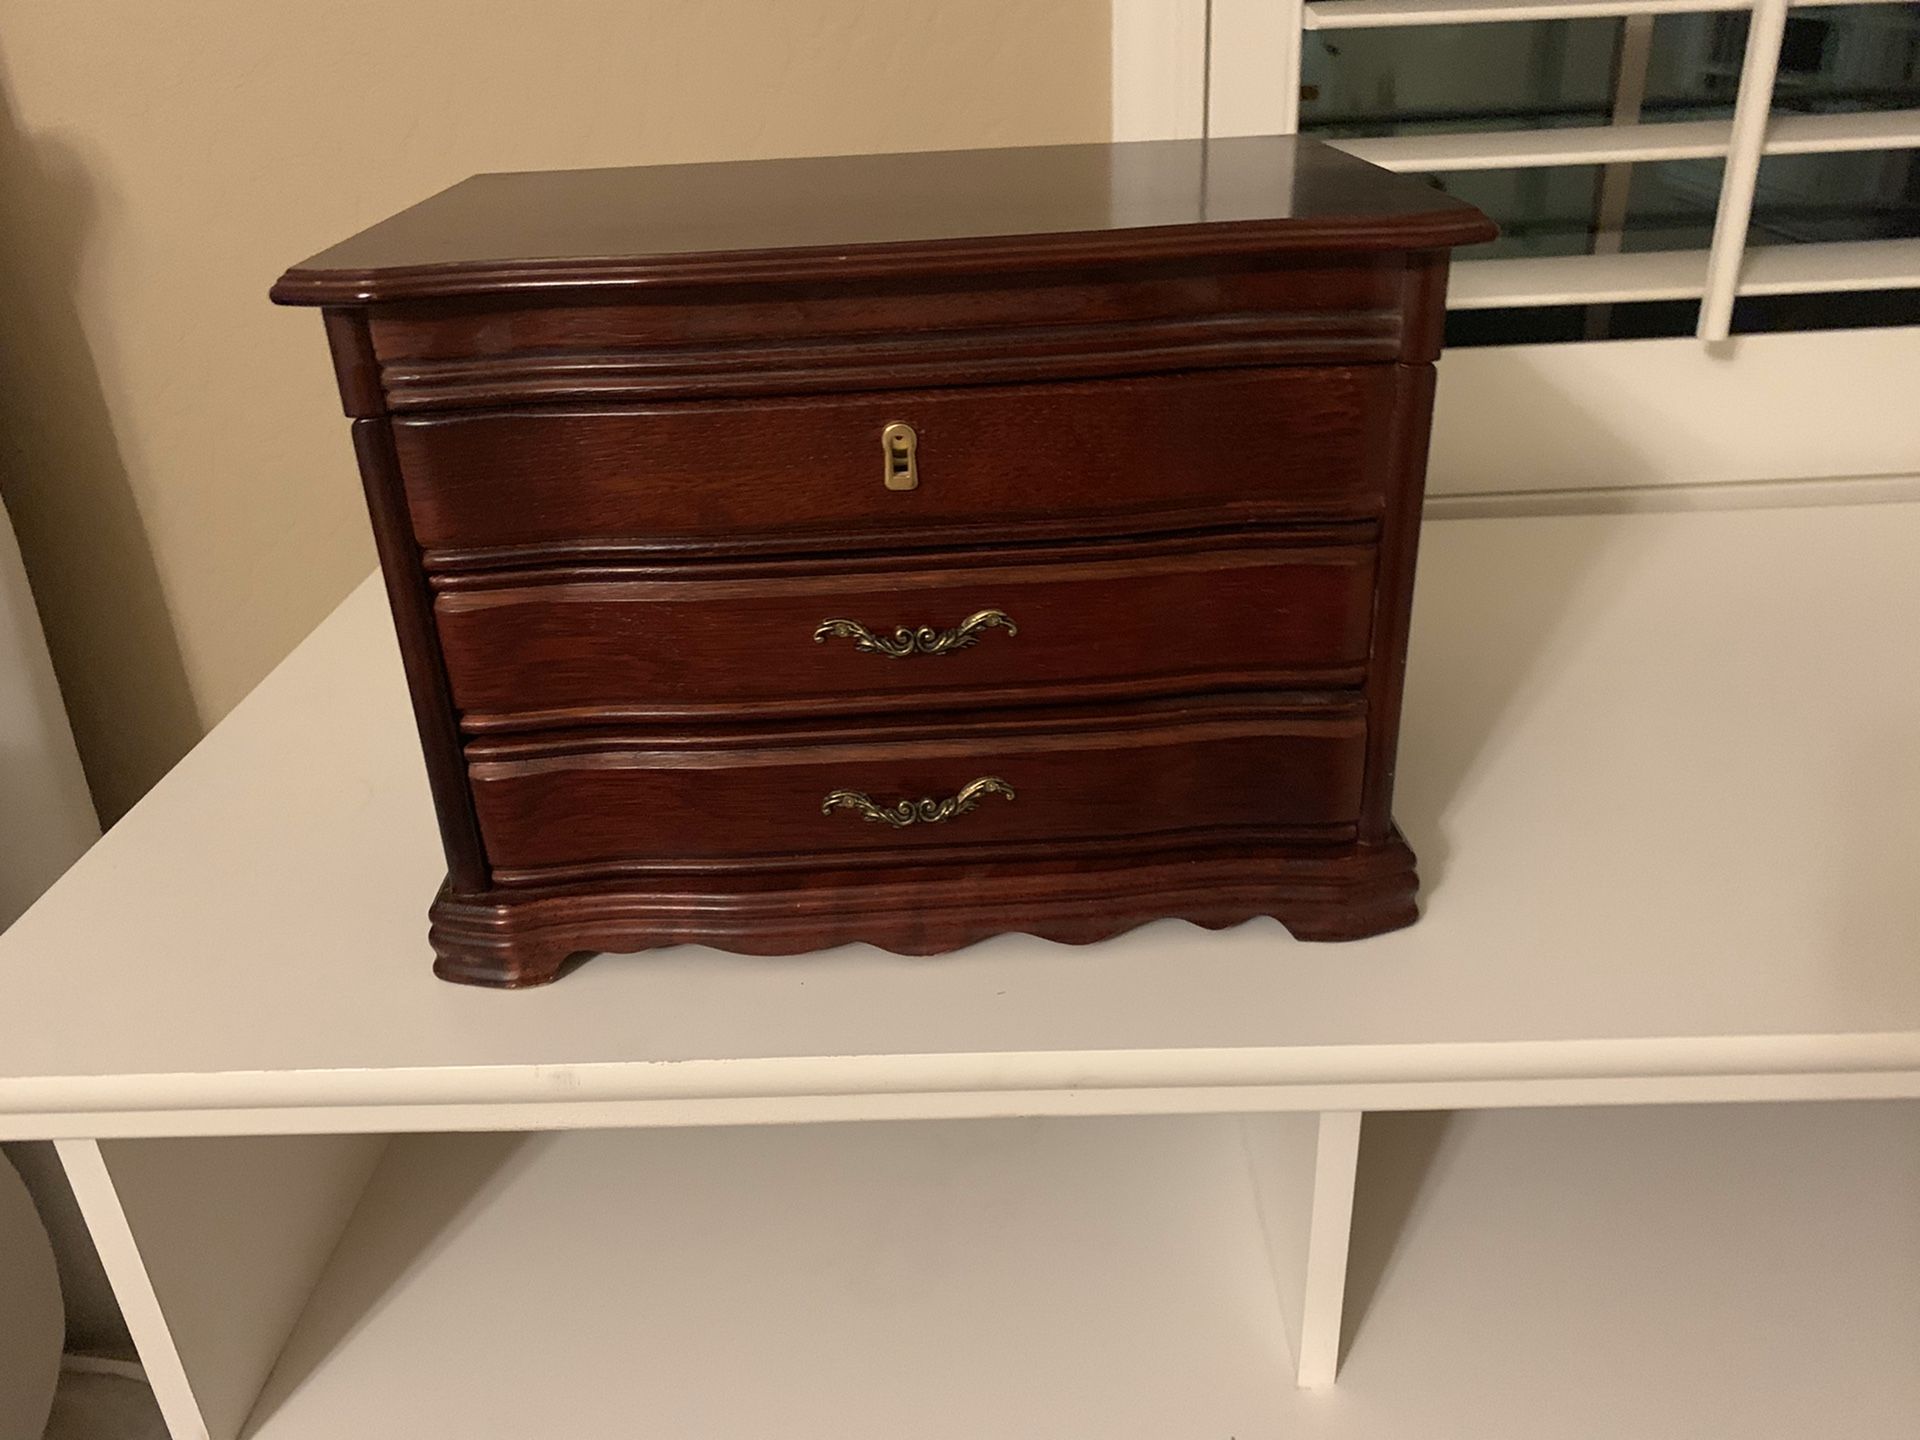 Elegant cherrywood jewelry box for an heirloom Christmas gift.